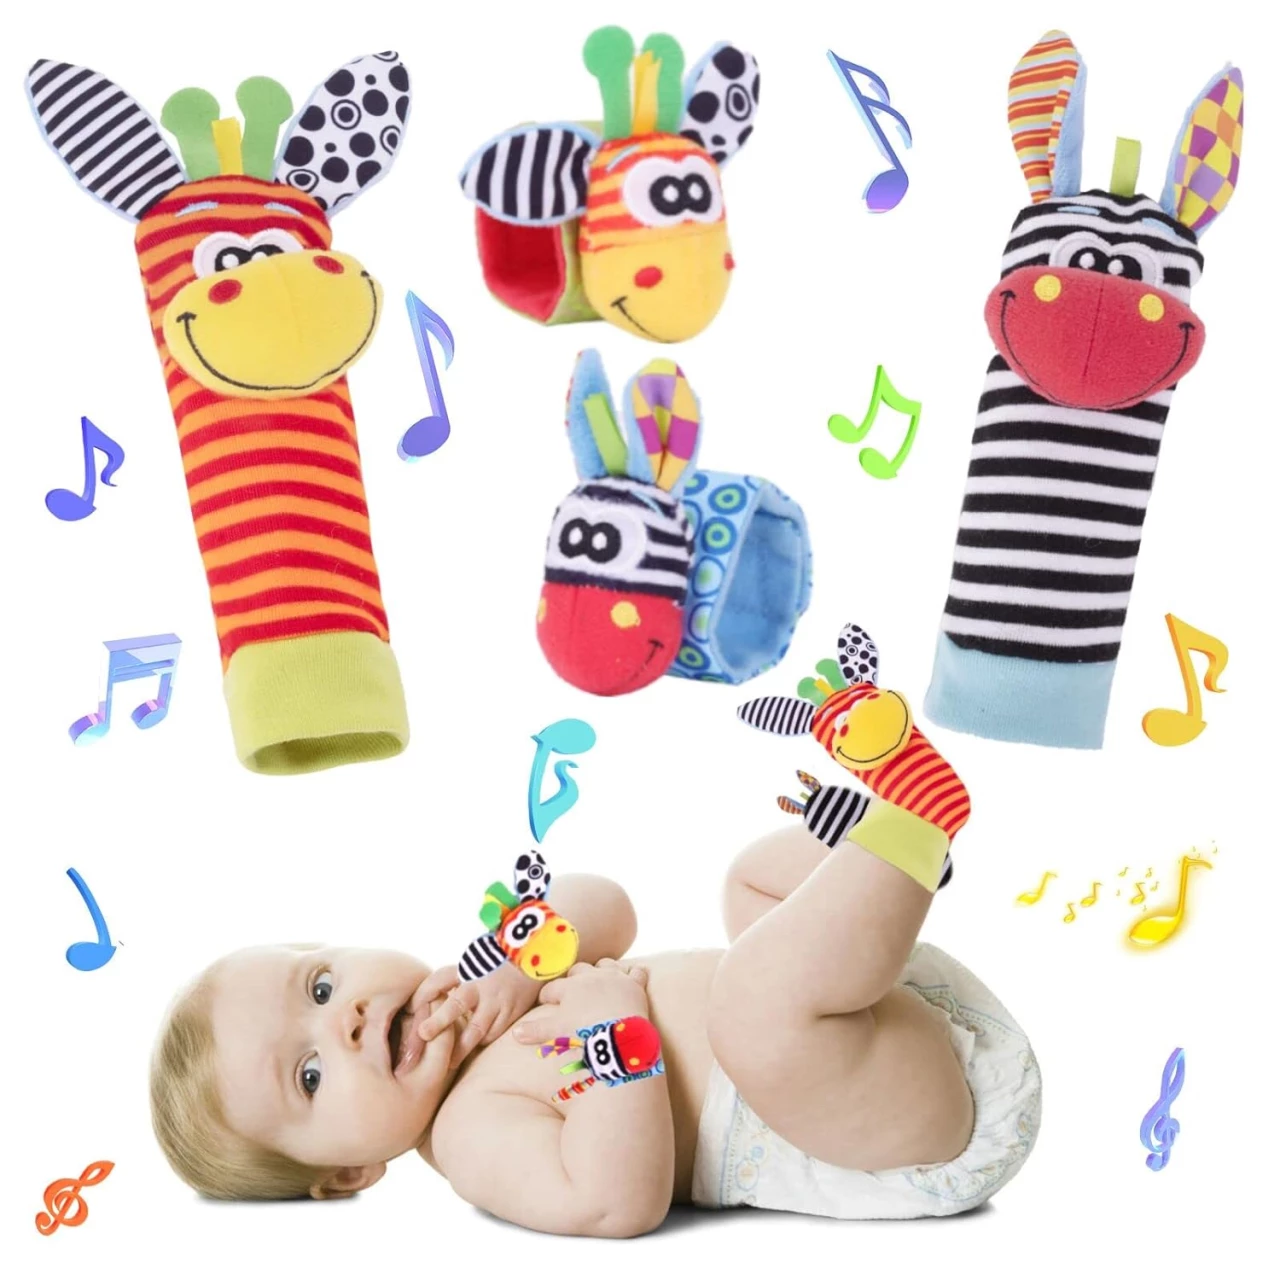 PADONISE Wrist Rattle Foot Finder Socks Set Arm Hand Bracelet Rattle Feet Leg Ankle Socks Newborn Soft Sensory Toy Baby Socks Newborn Wrist Rattles for Babies 0-6 Months Infant Baby Gift 6-12 Months